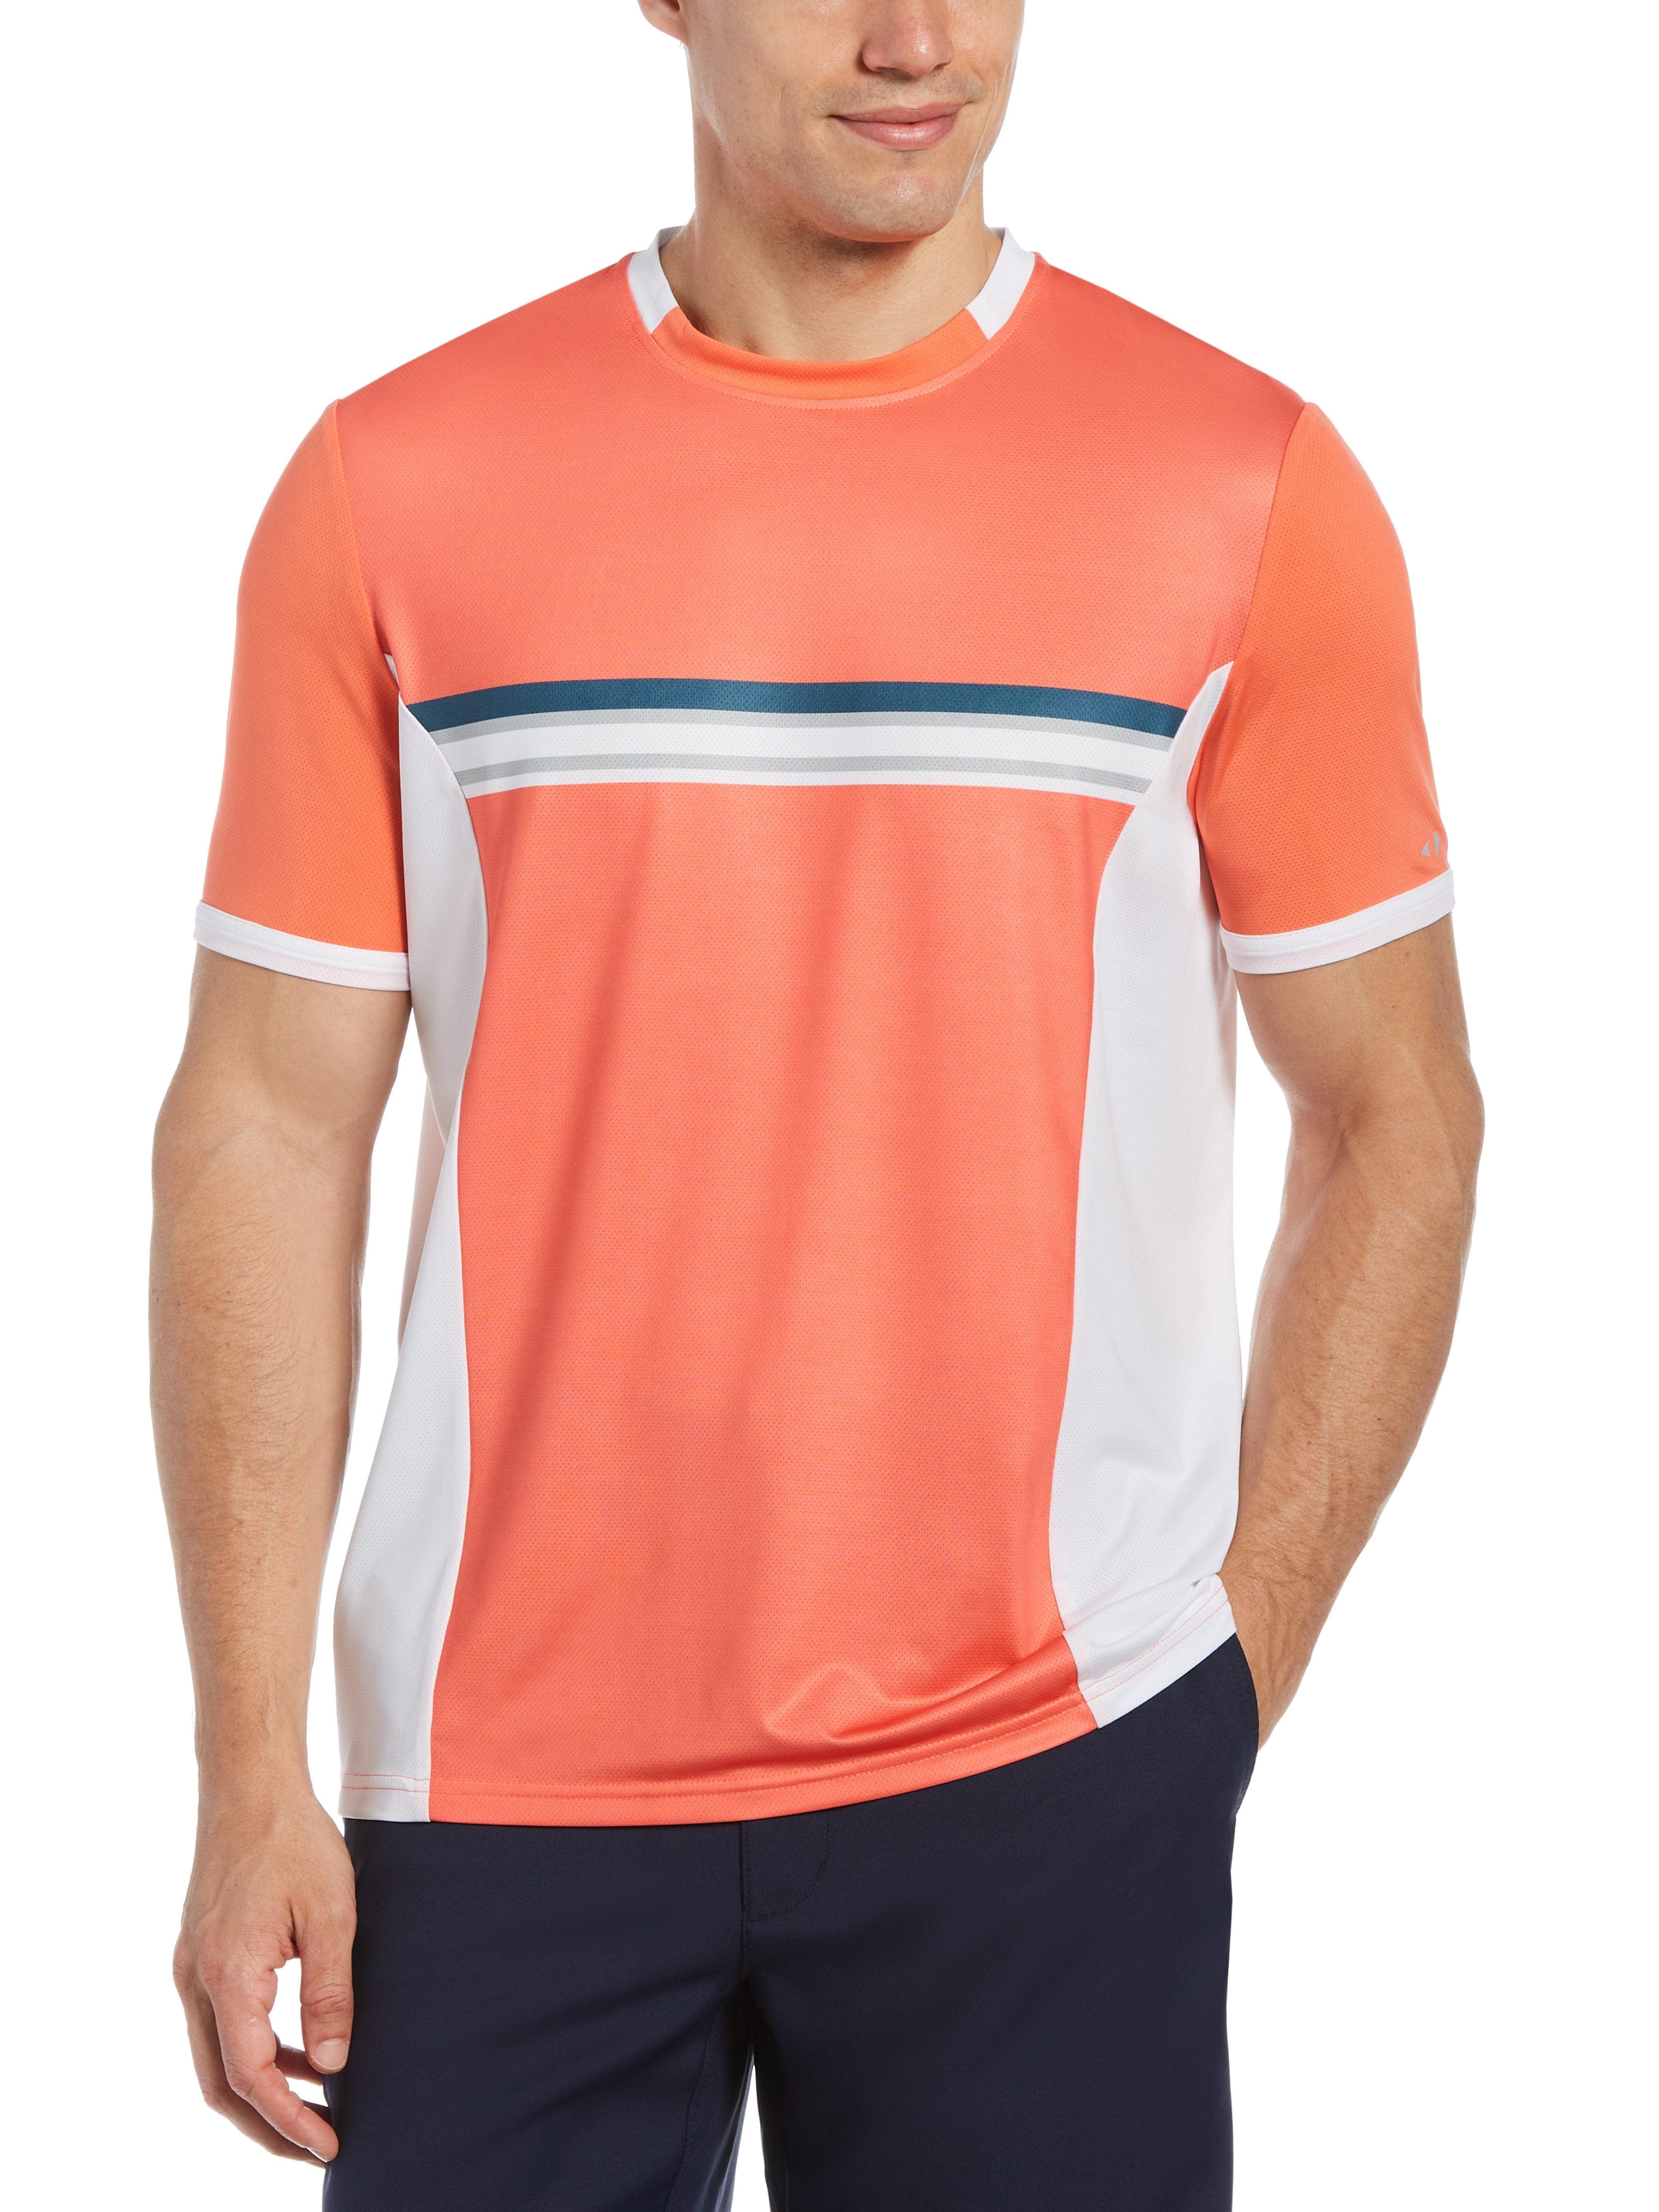 Grand Slam Mens Pieced Print Chest Stripe Crew Neck Tennis T-Shirt, Size XL, Emberglow Orange, Polyester/Spandex | Golf Apparel Shop